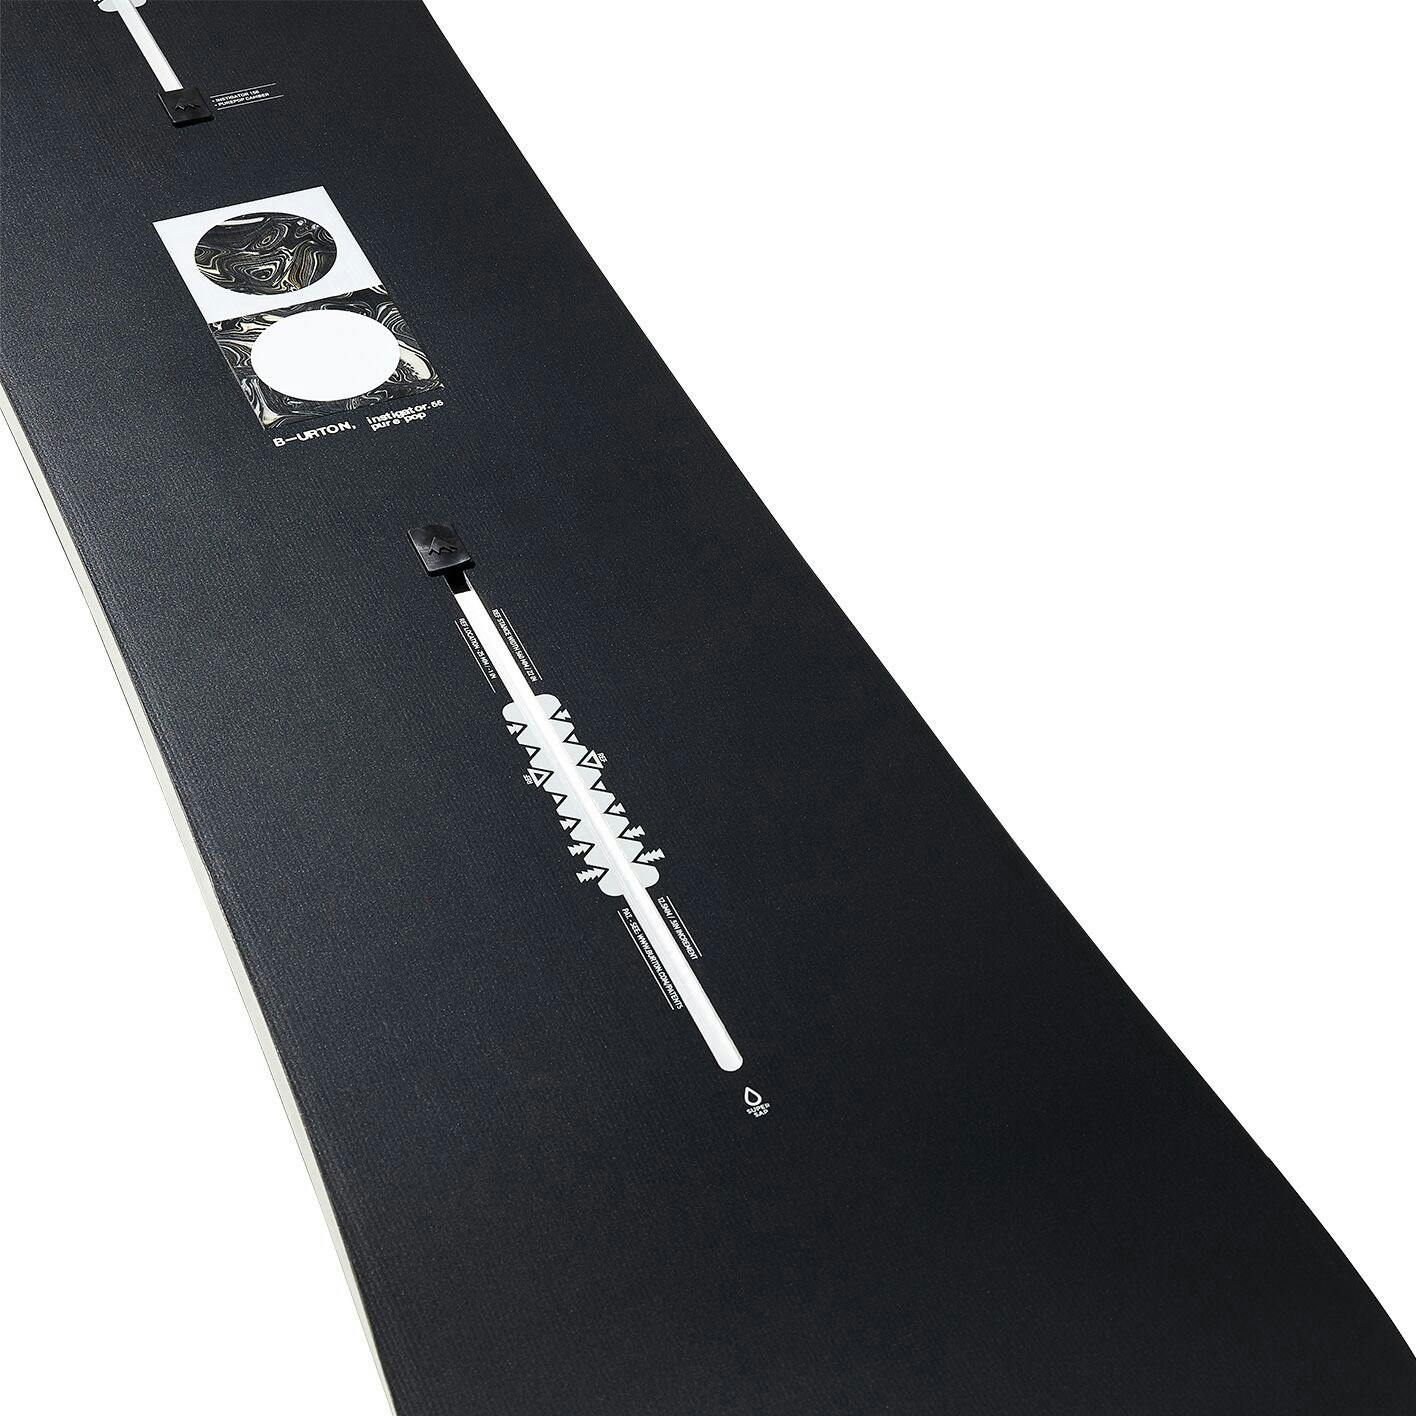 Burton Instigator PurePop Camber Snowboard · 2023 · 150 cm